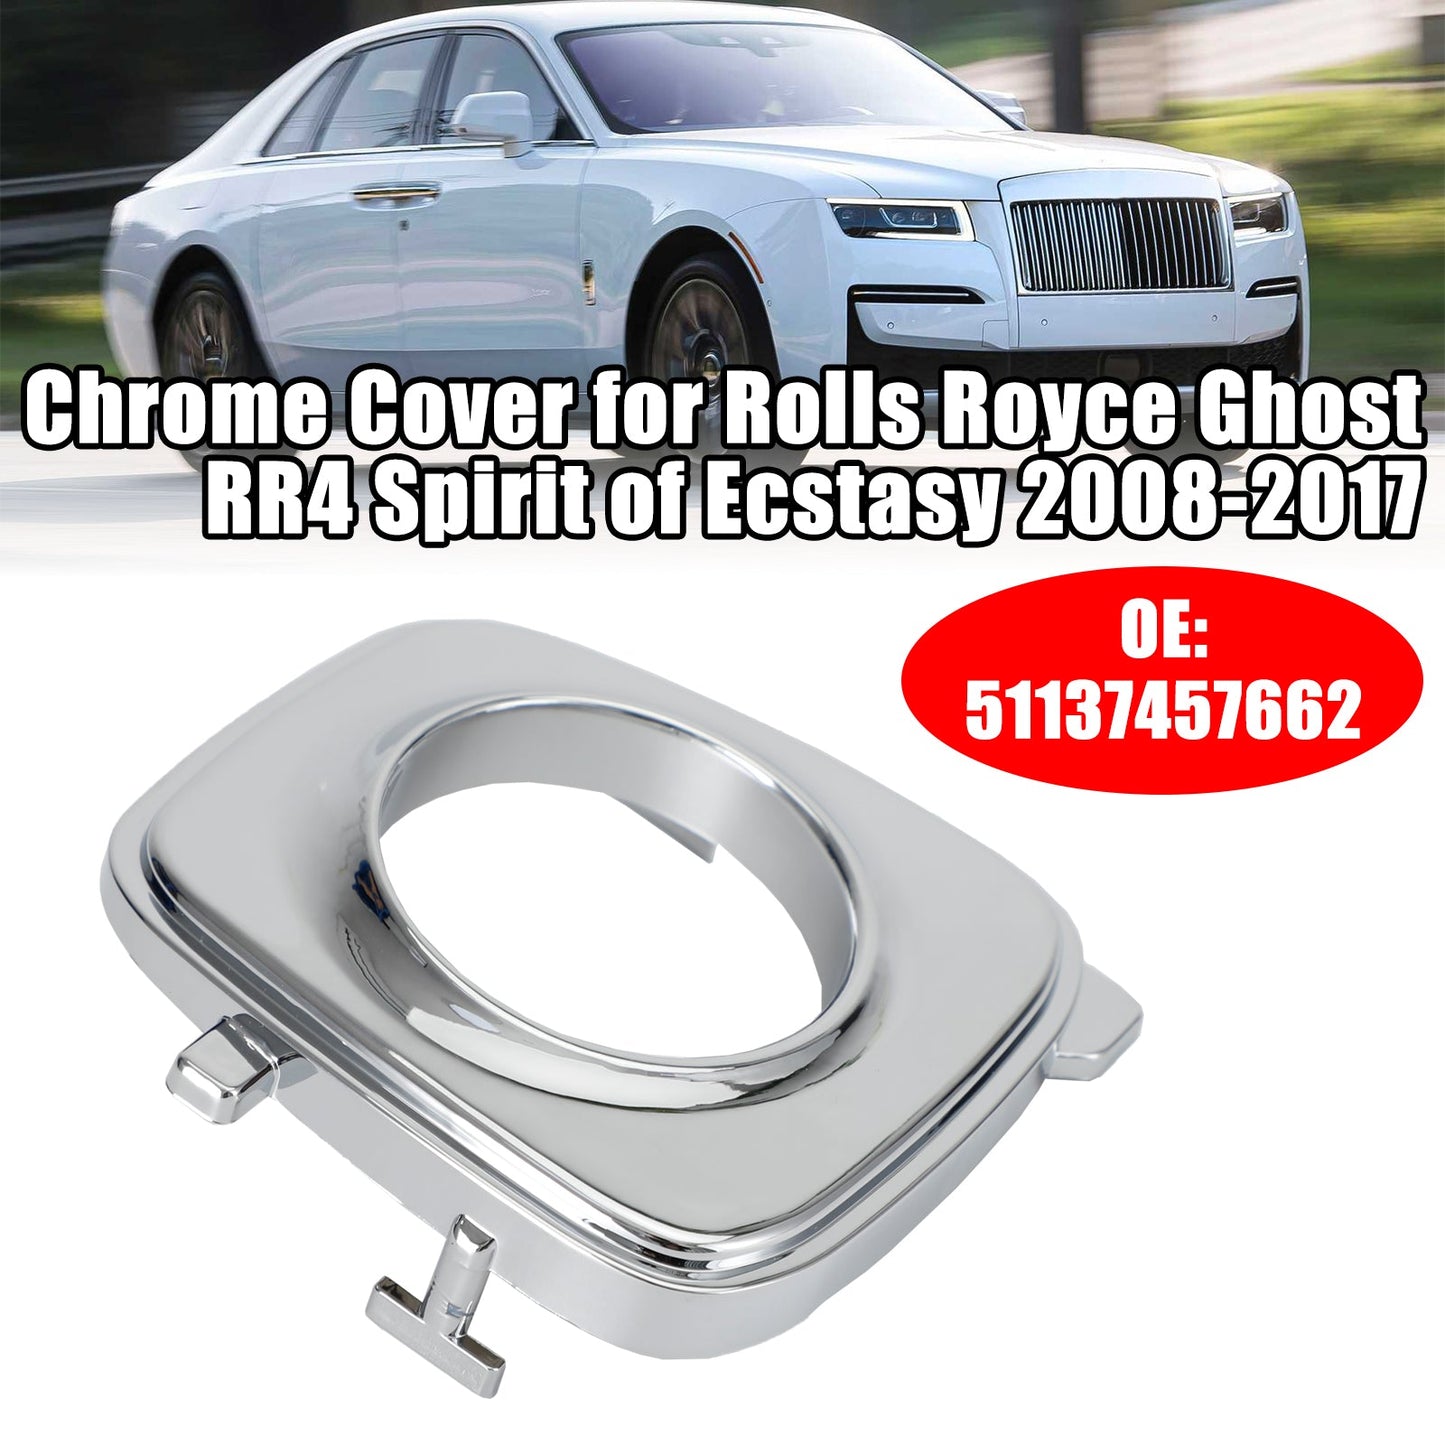 2008-2017 Rolls Royce Ghost RR4 Spirit of Ecstasy 51137457662 Chromabdeckung